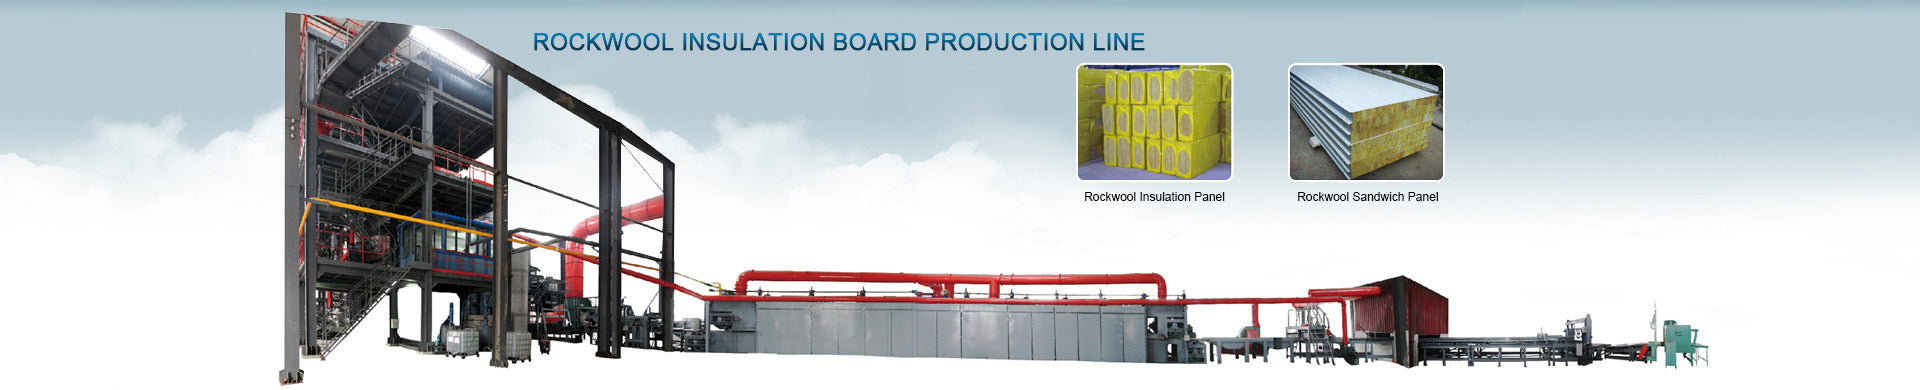 Rockwool_Insulation_Board_Production_Line